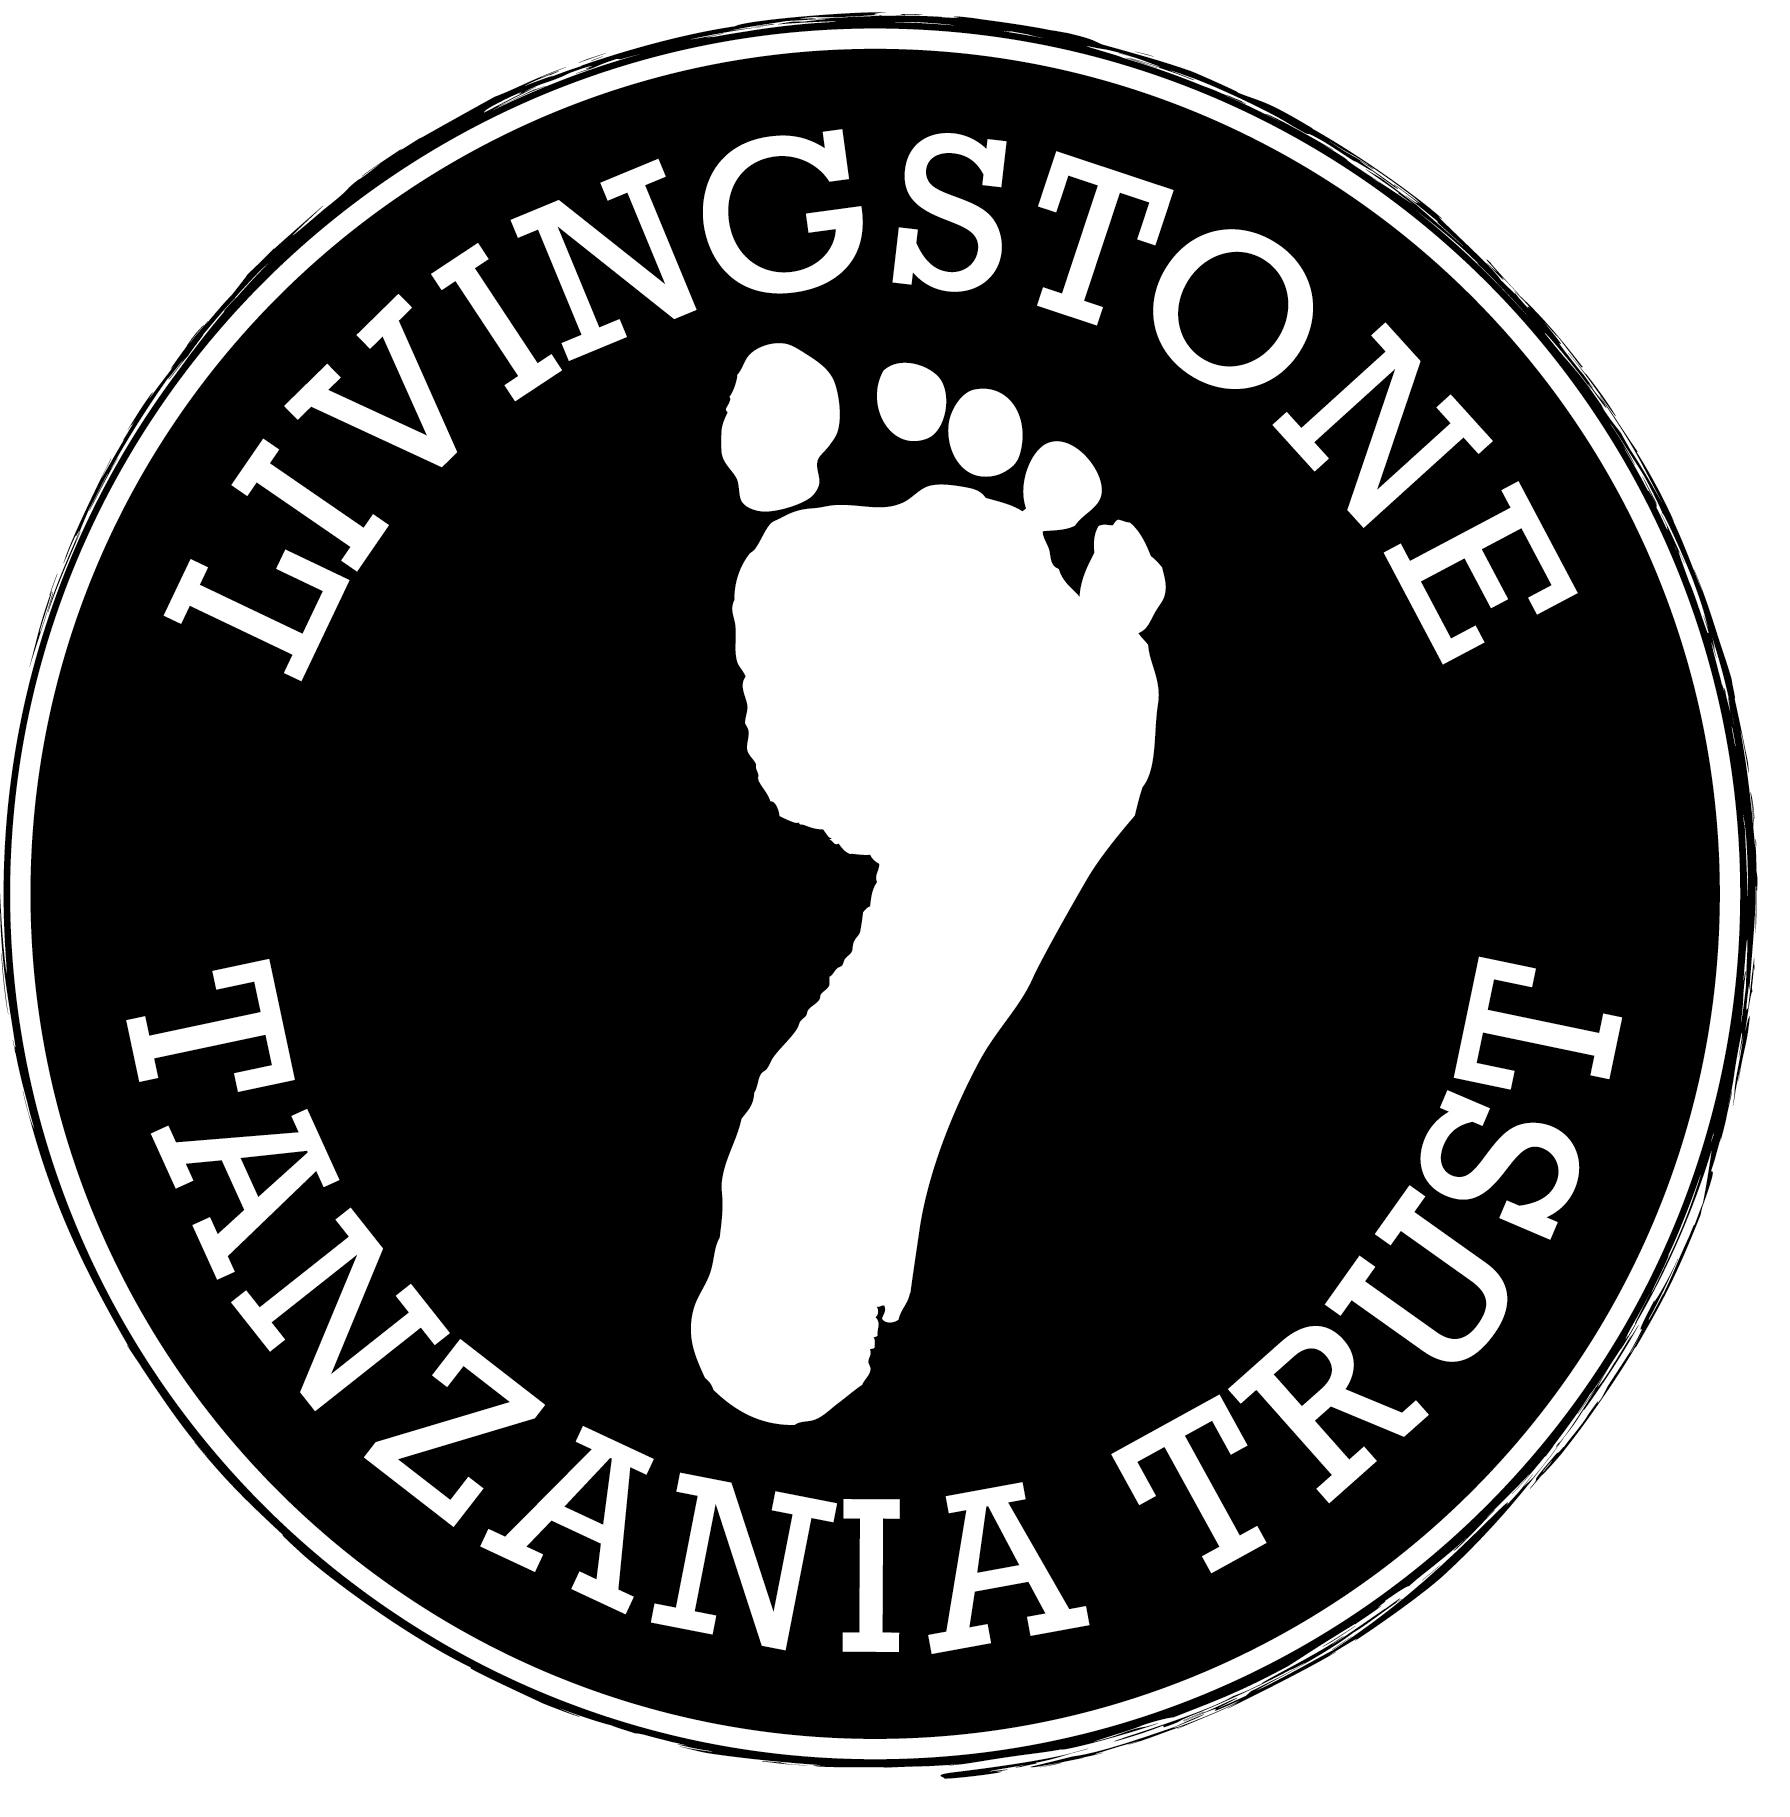 www.livingstonetanzaniatrust.com